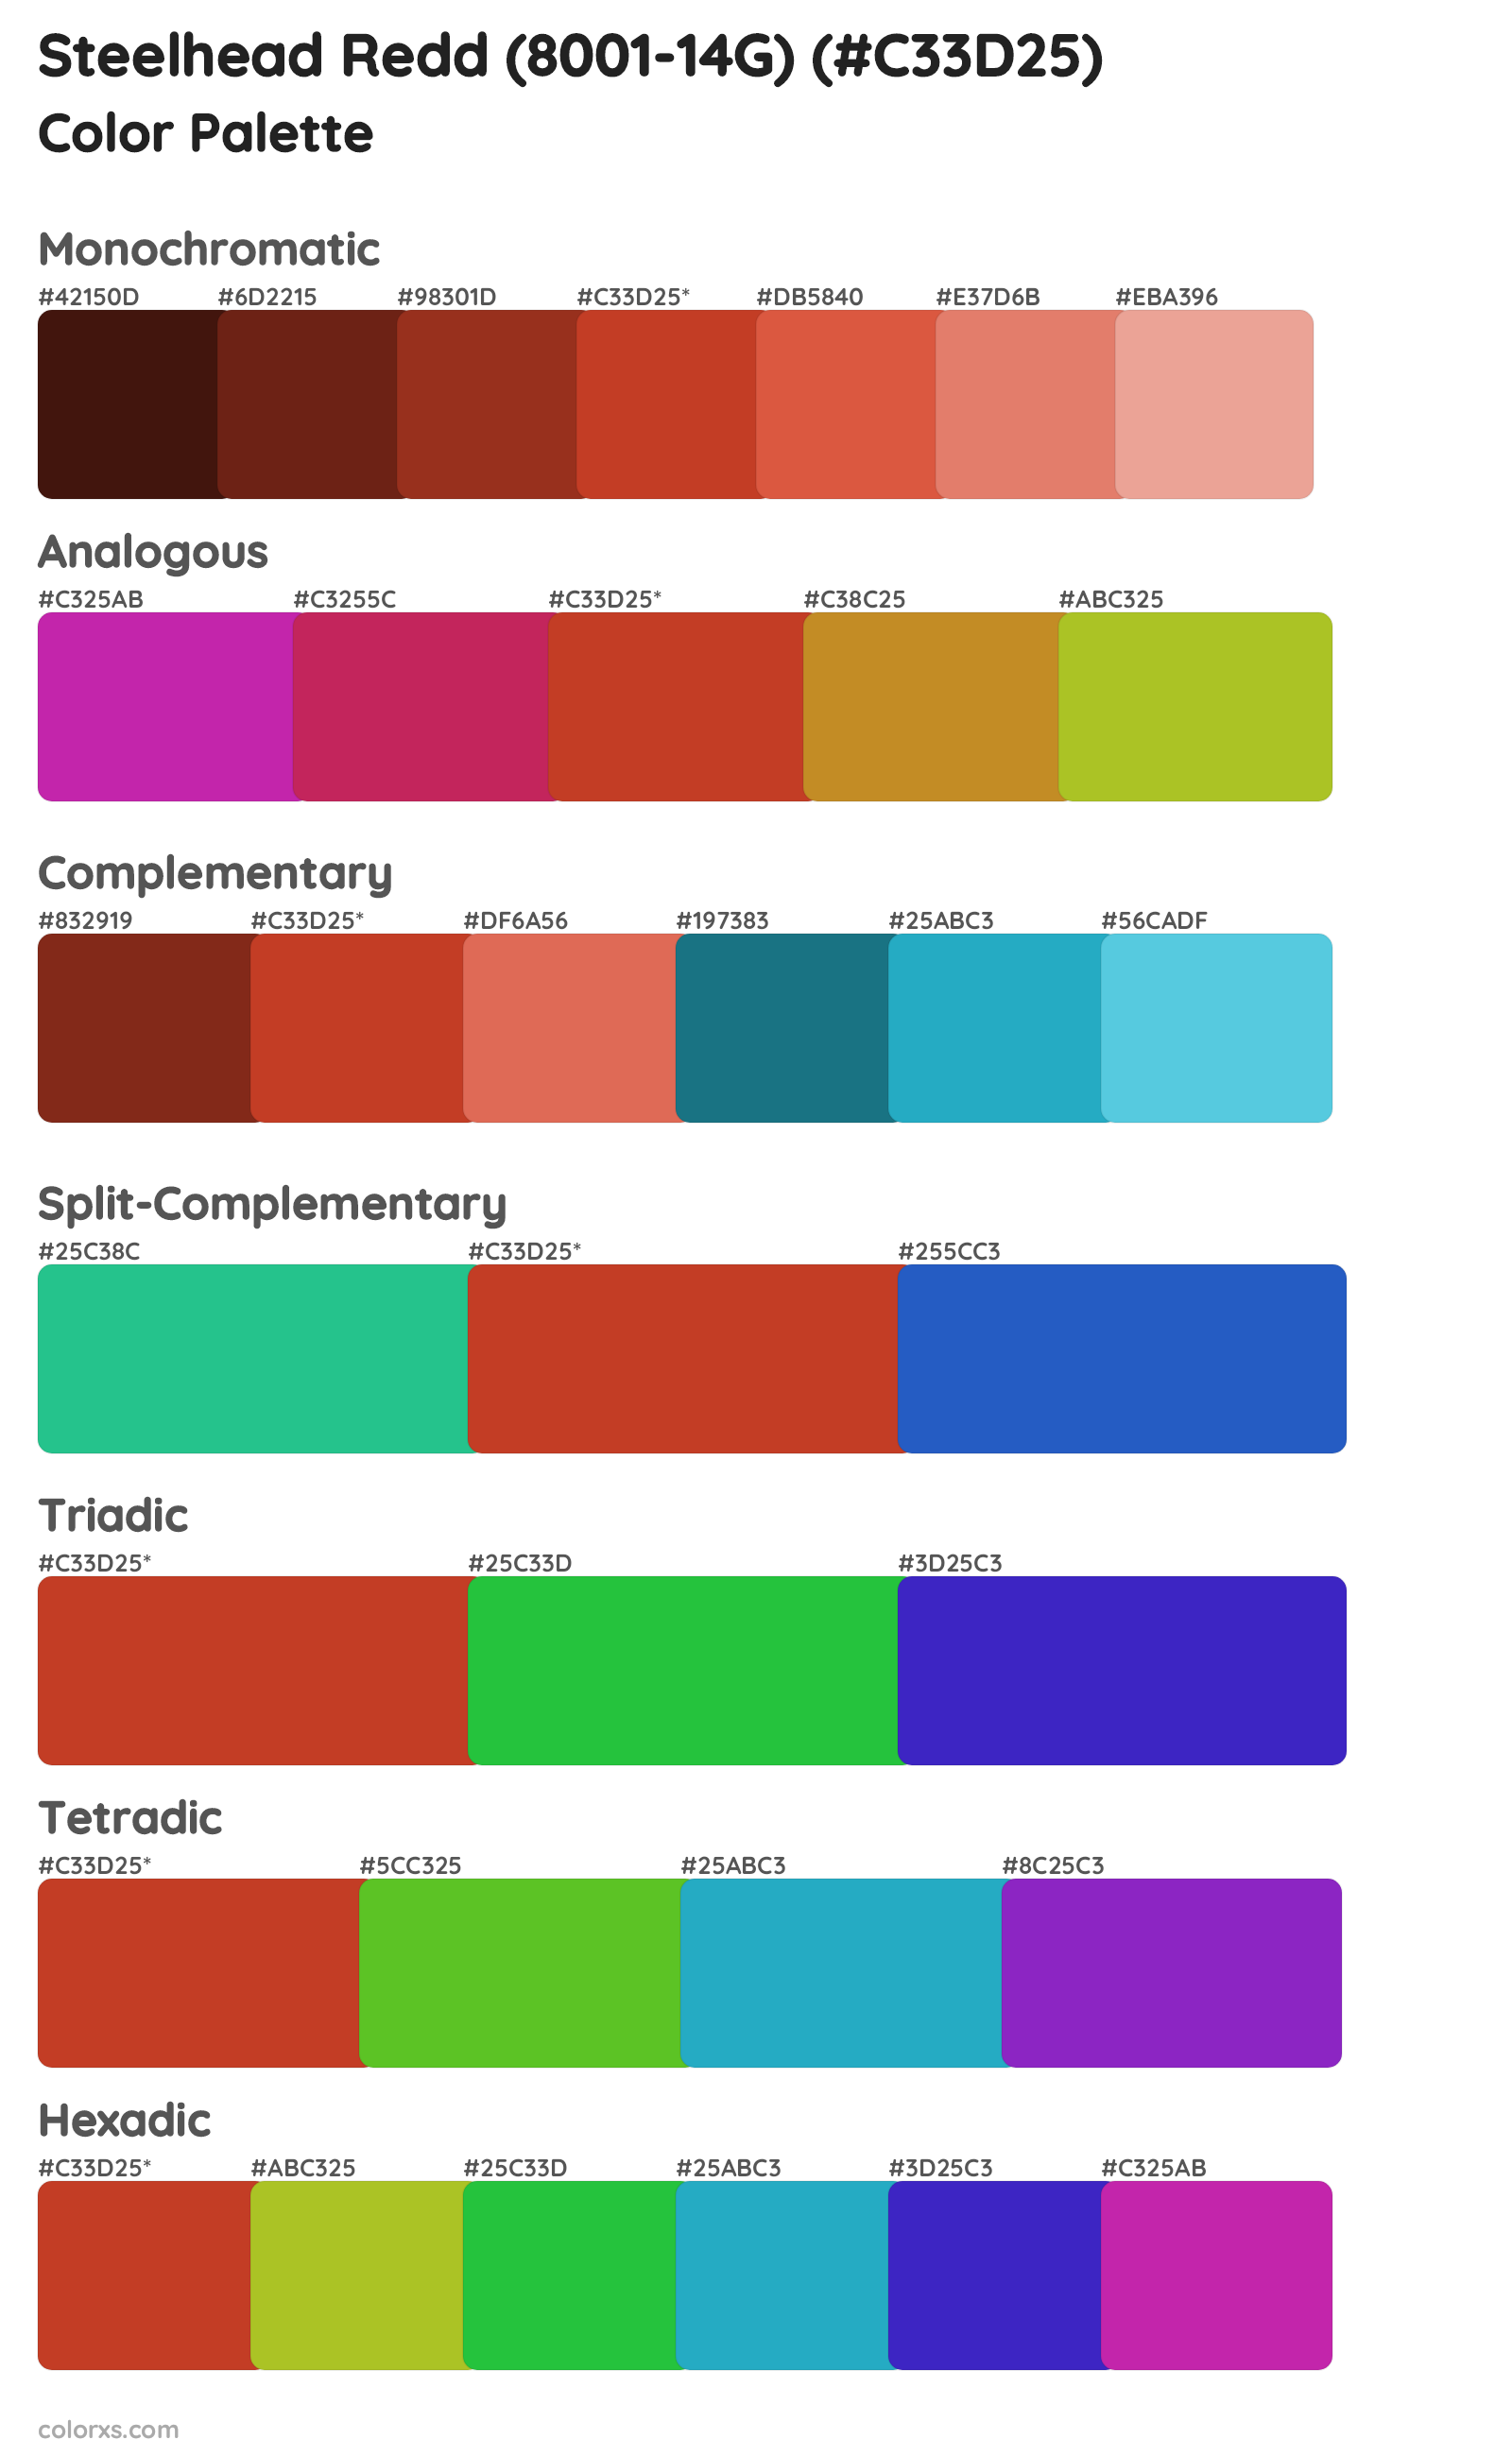 Steelhead Redd (8001-14G) Color Scheme Palettes